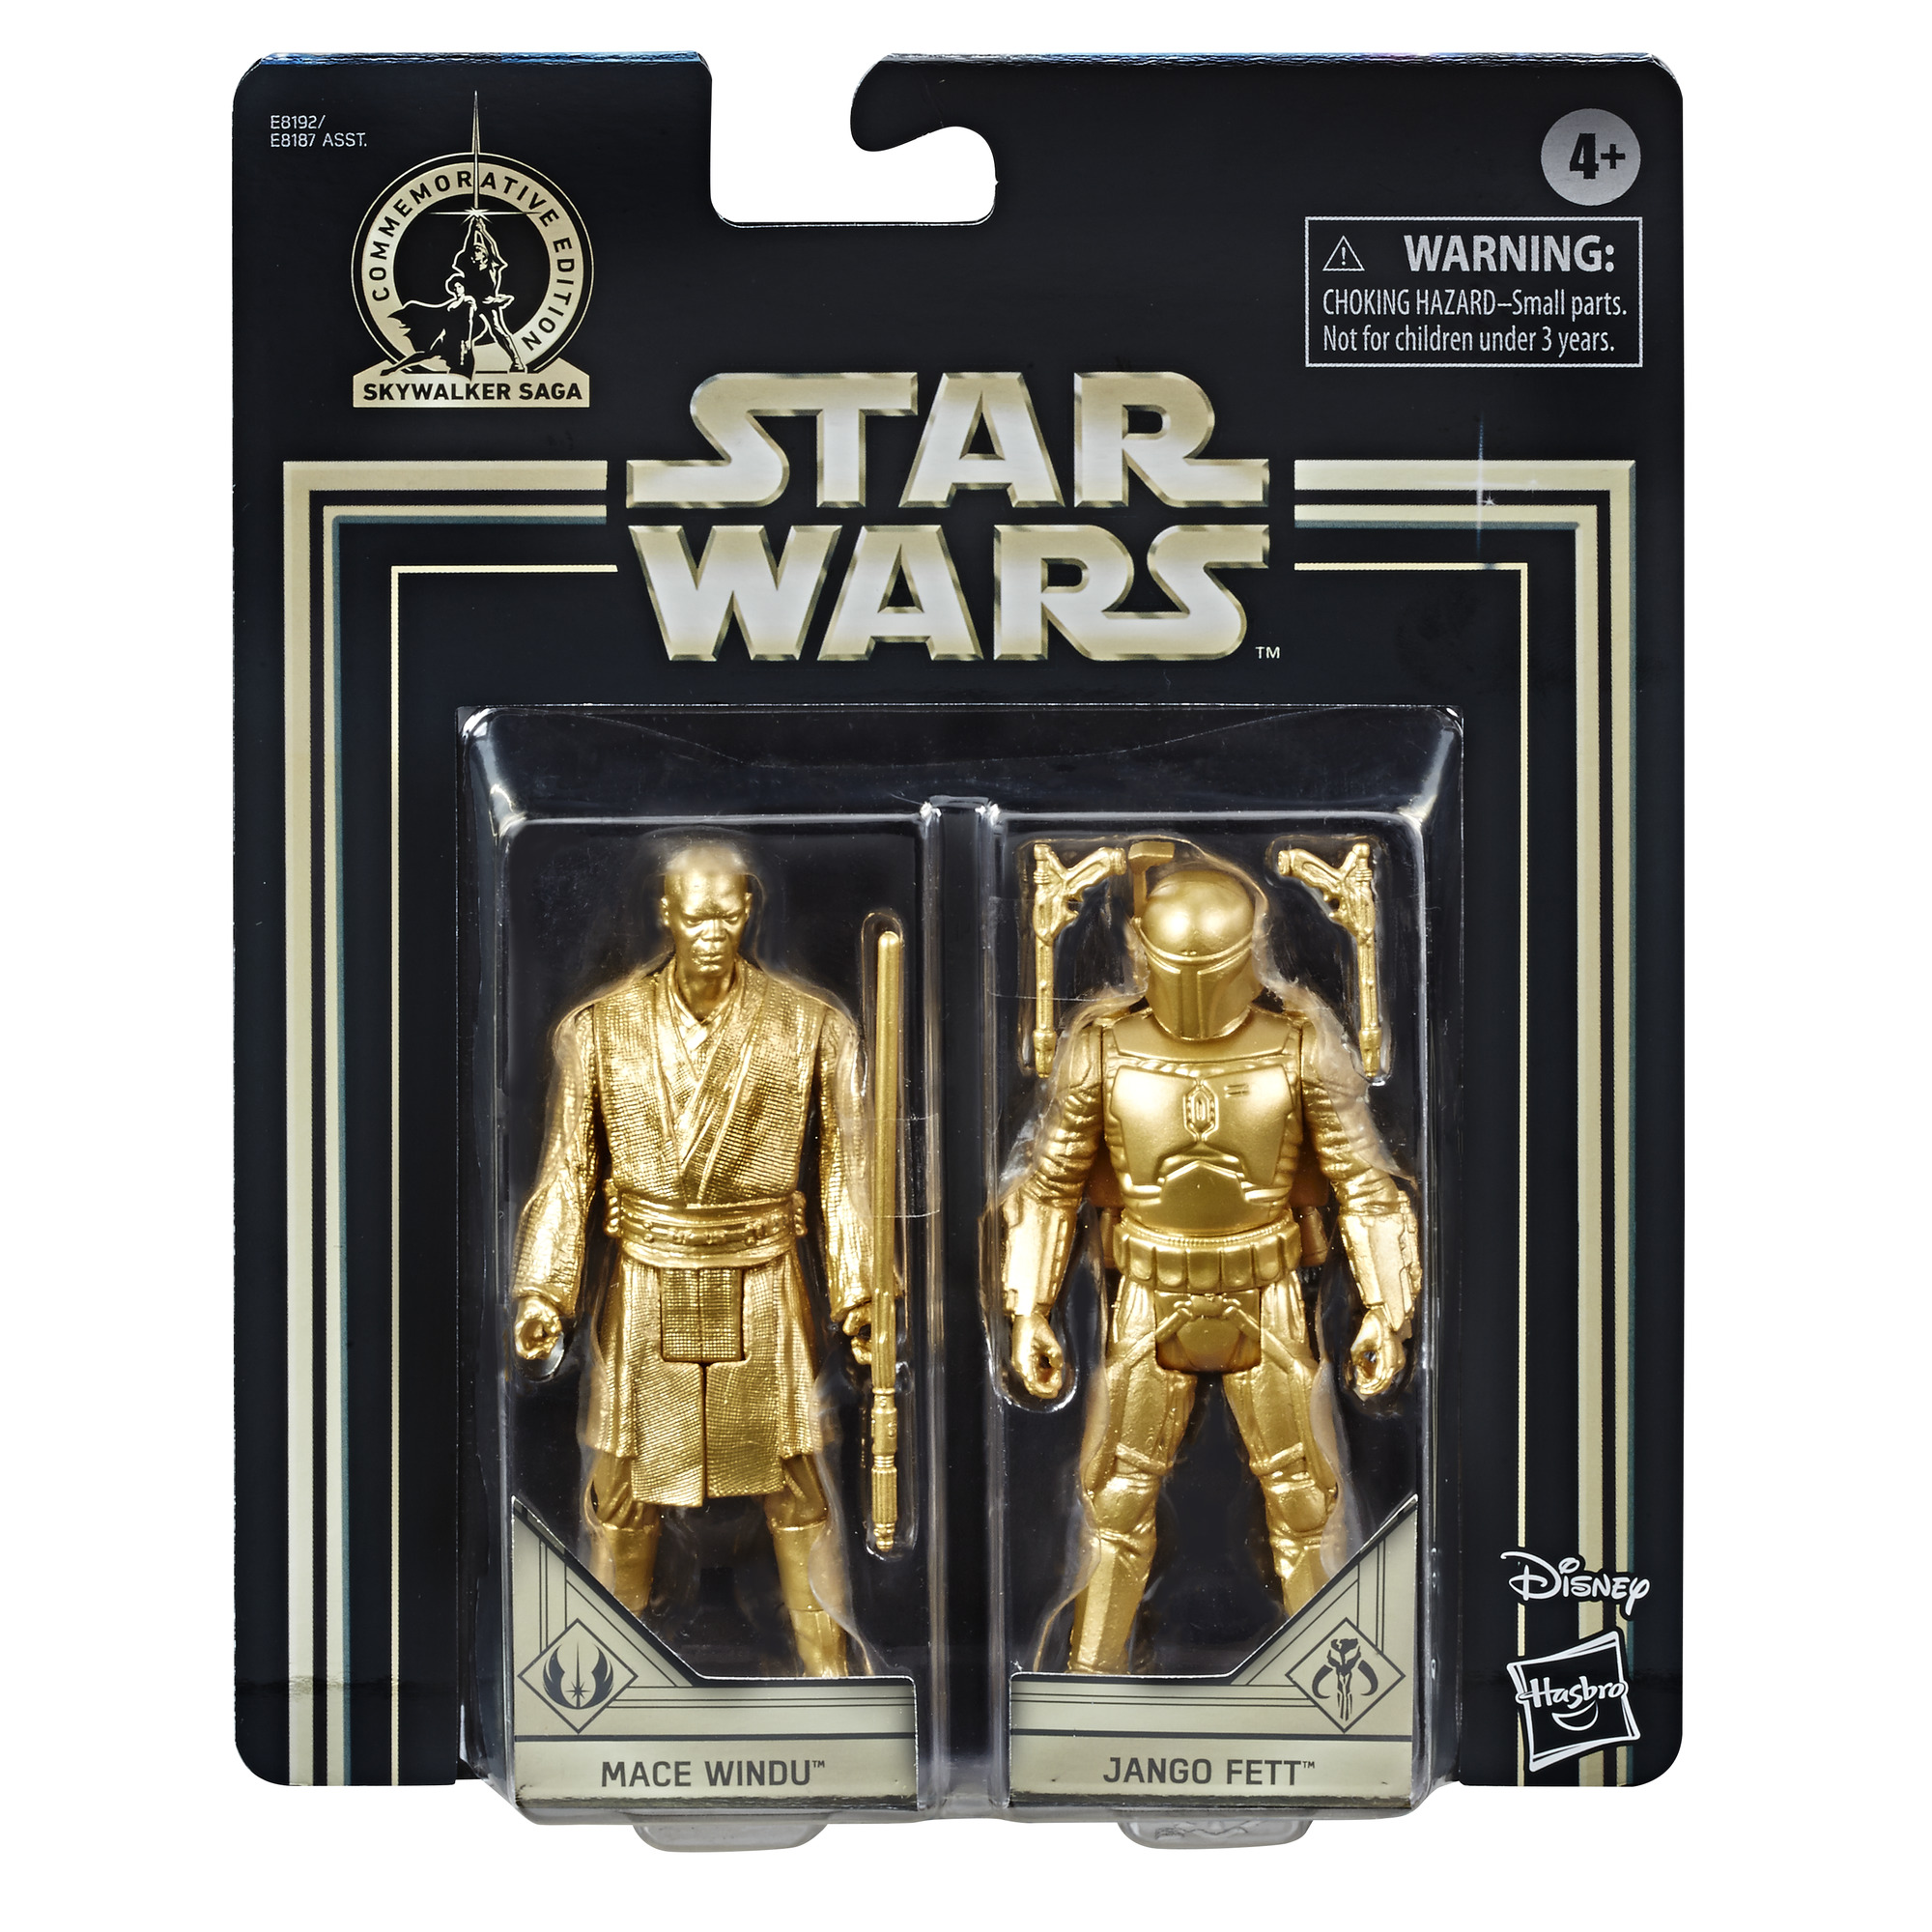 Star Wars Skywalker Saga 3.75-inch Mace Windu and Jango Fett 2-Pack Figures - image 2 of 5